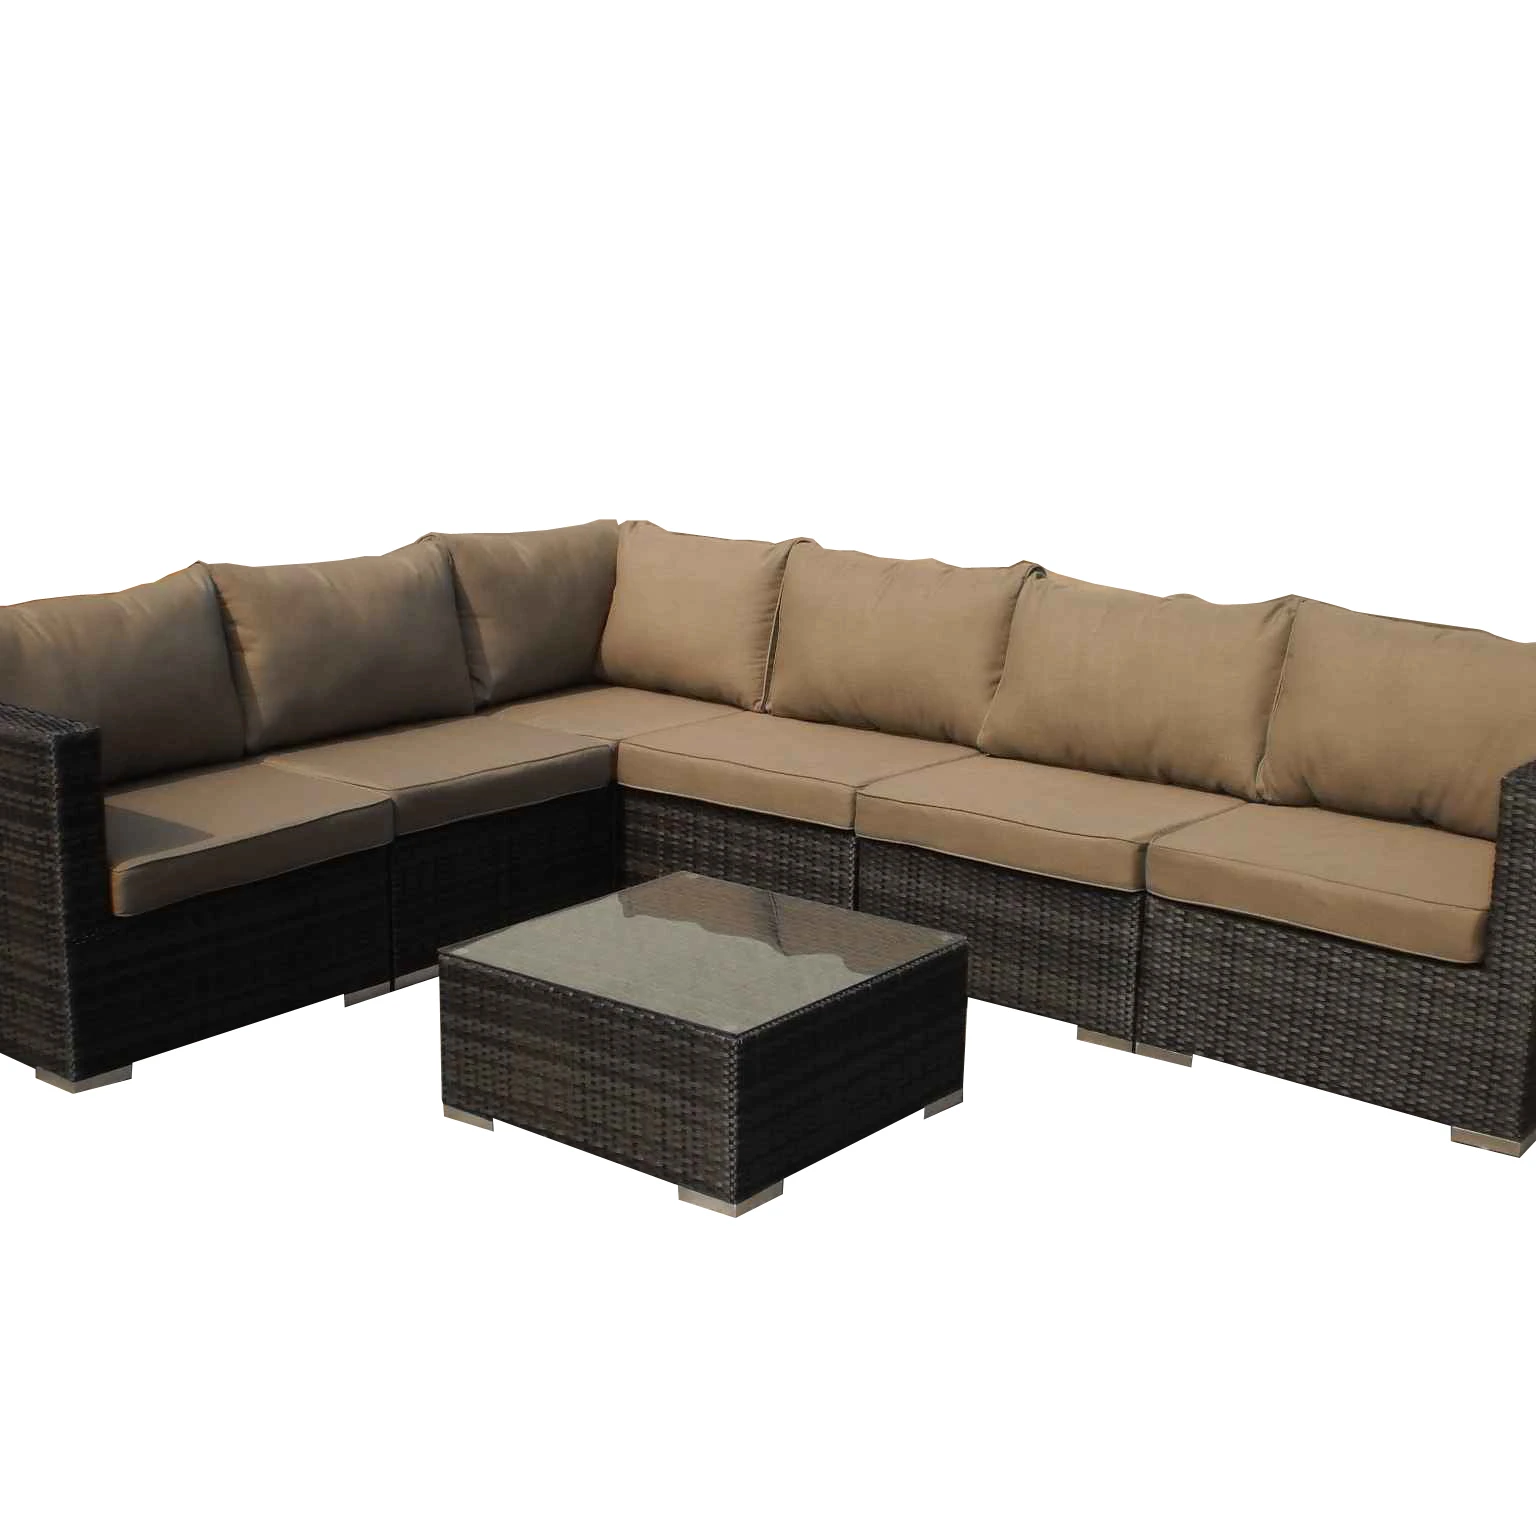 Best Selling High Back Recliner Alu Rattan Outdoor Furniture Multiplayer Garden Sofa